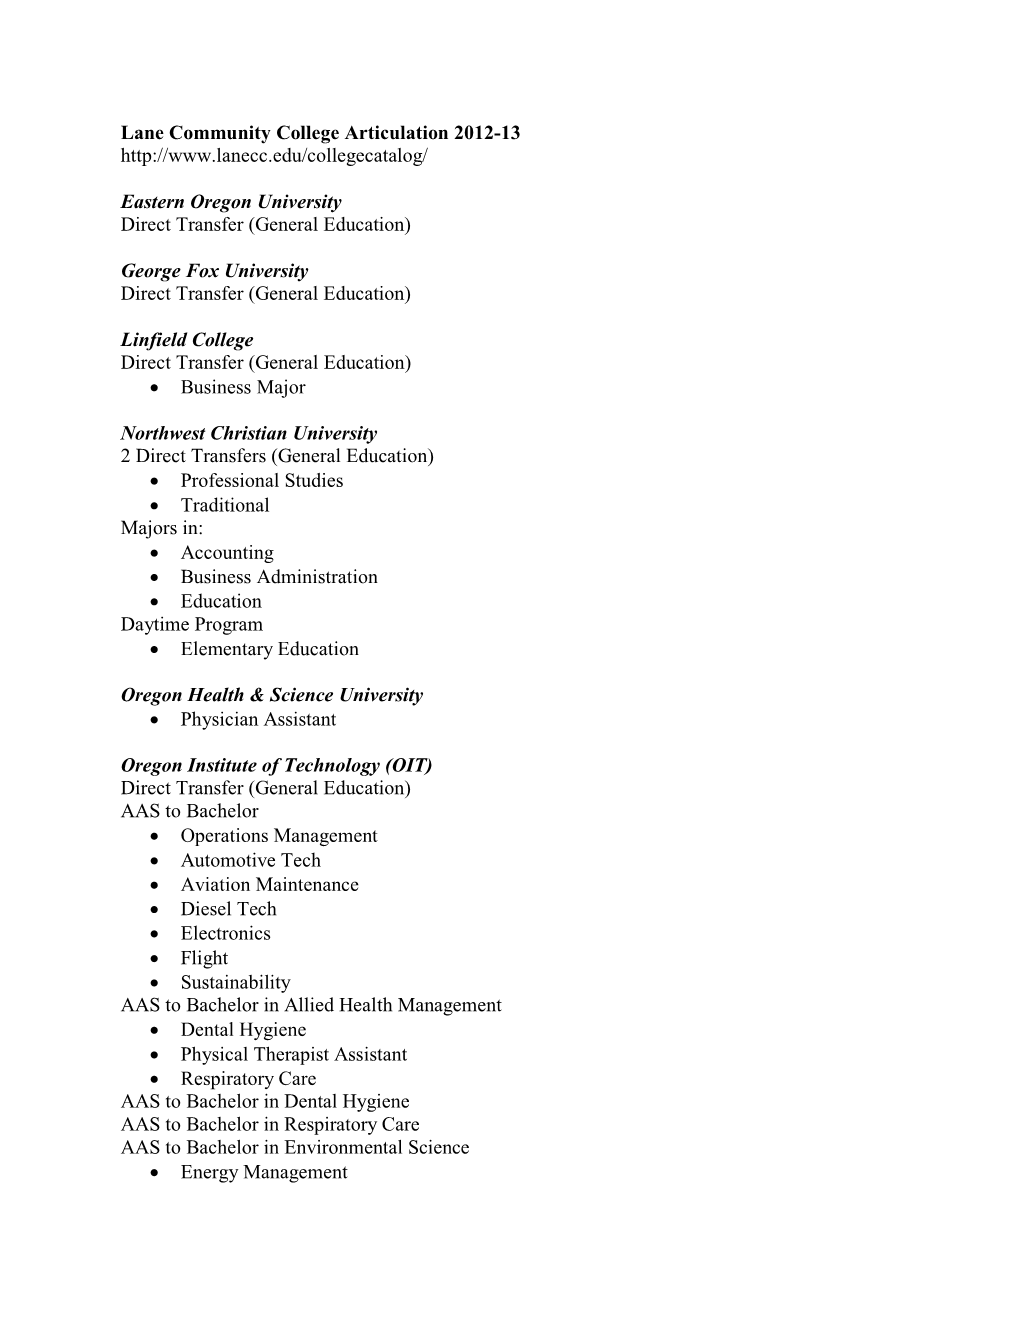 Lane Community College Articulation Agreements, 2012-13